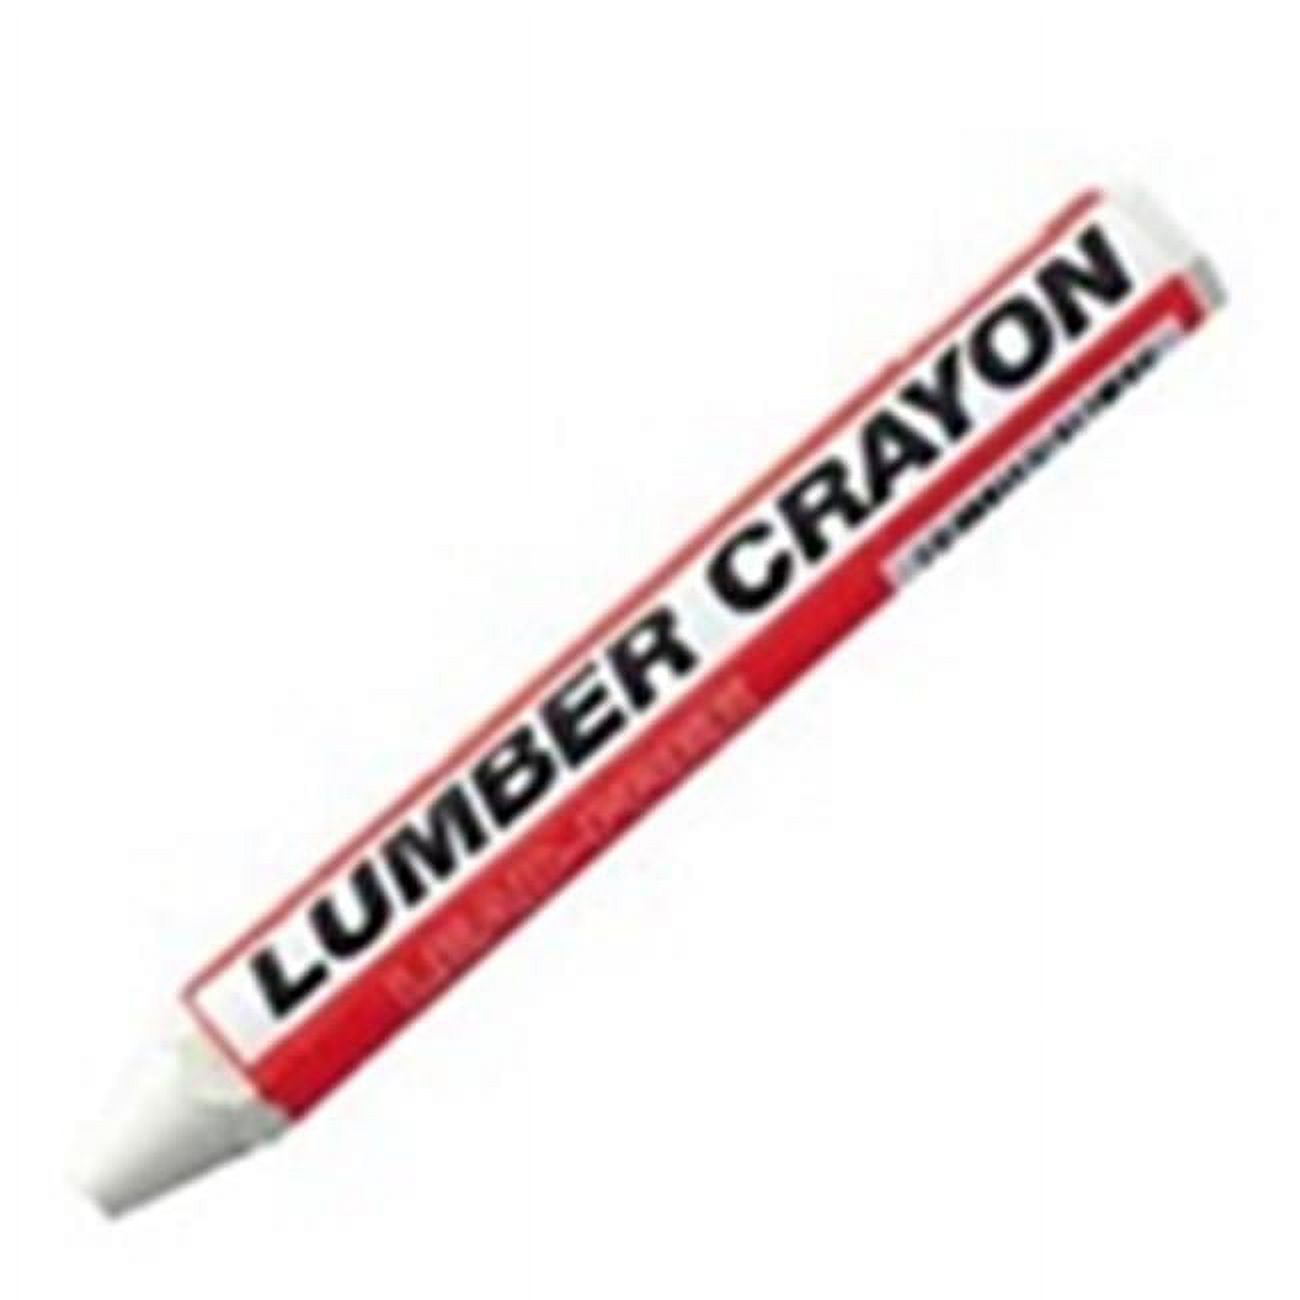 Markal #200 Yellow Lumber Crayon